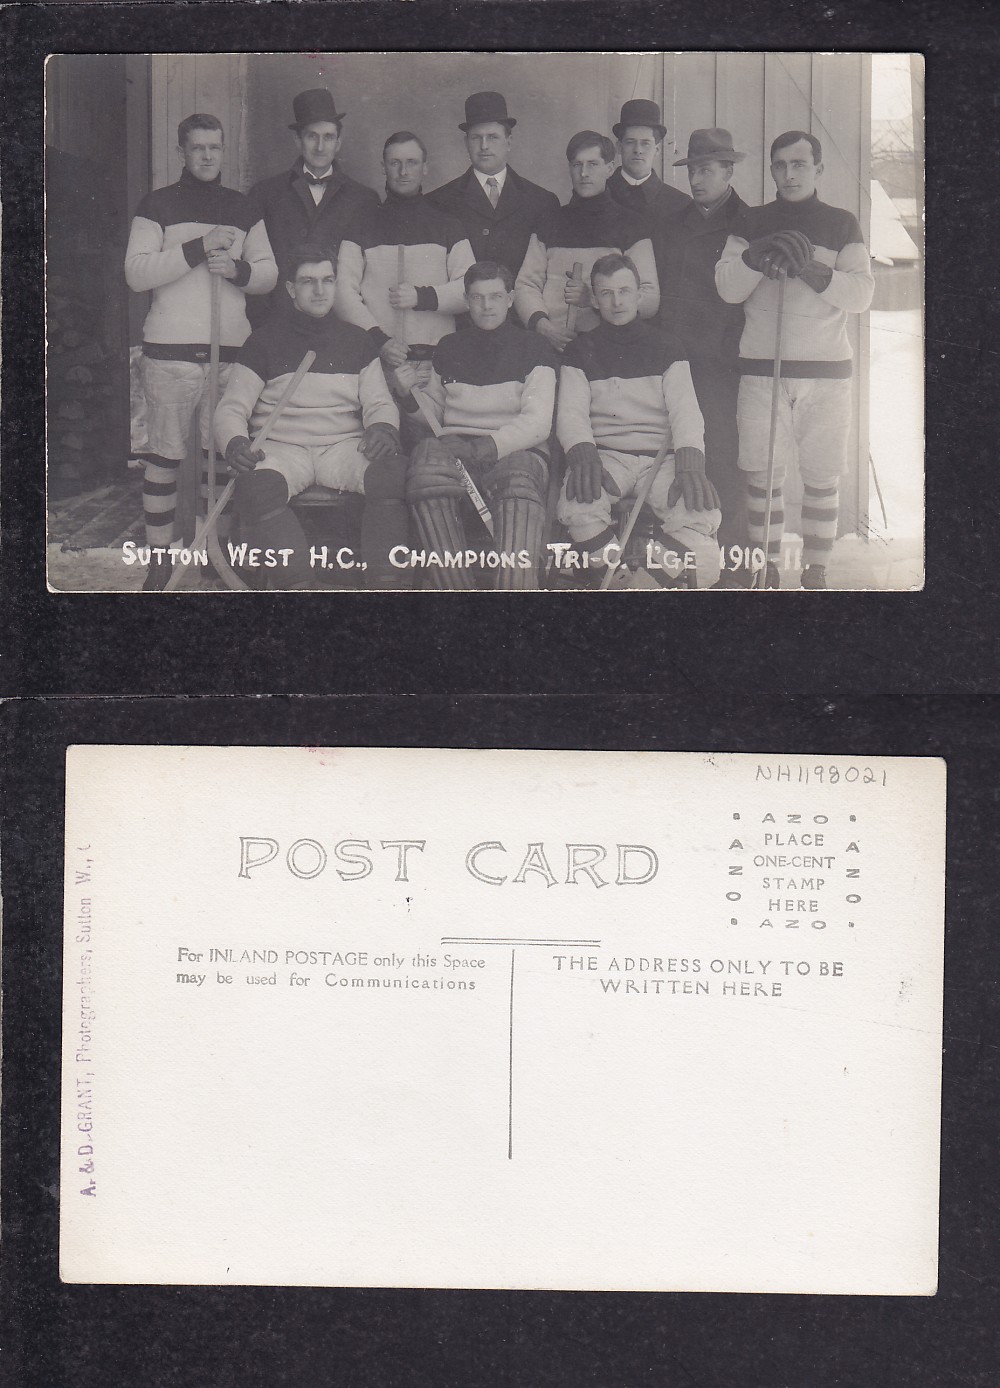 1910-11 SUTTON HOCKEY TEAM POST CARD photo